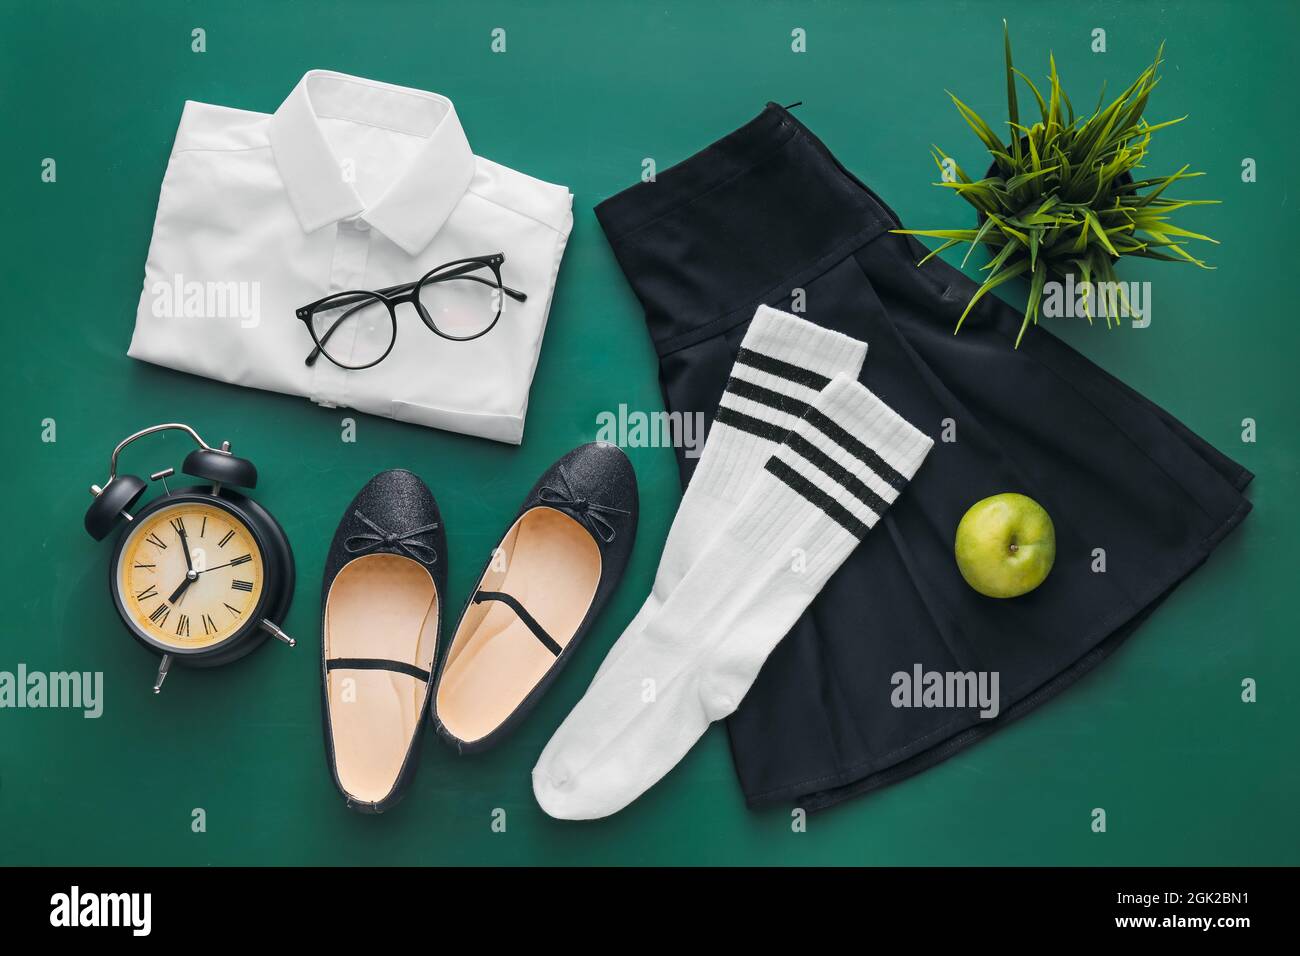 Stylish school uniform, shoes, eyeglasses and alarm clock on color background Stock Photo